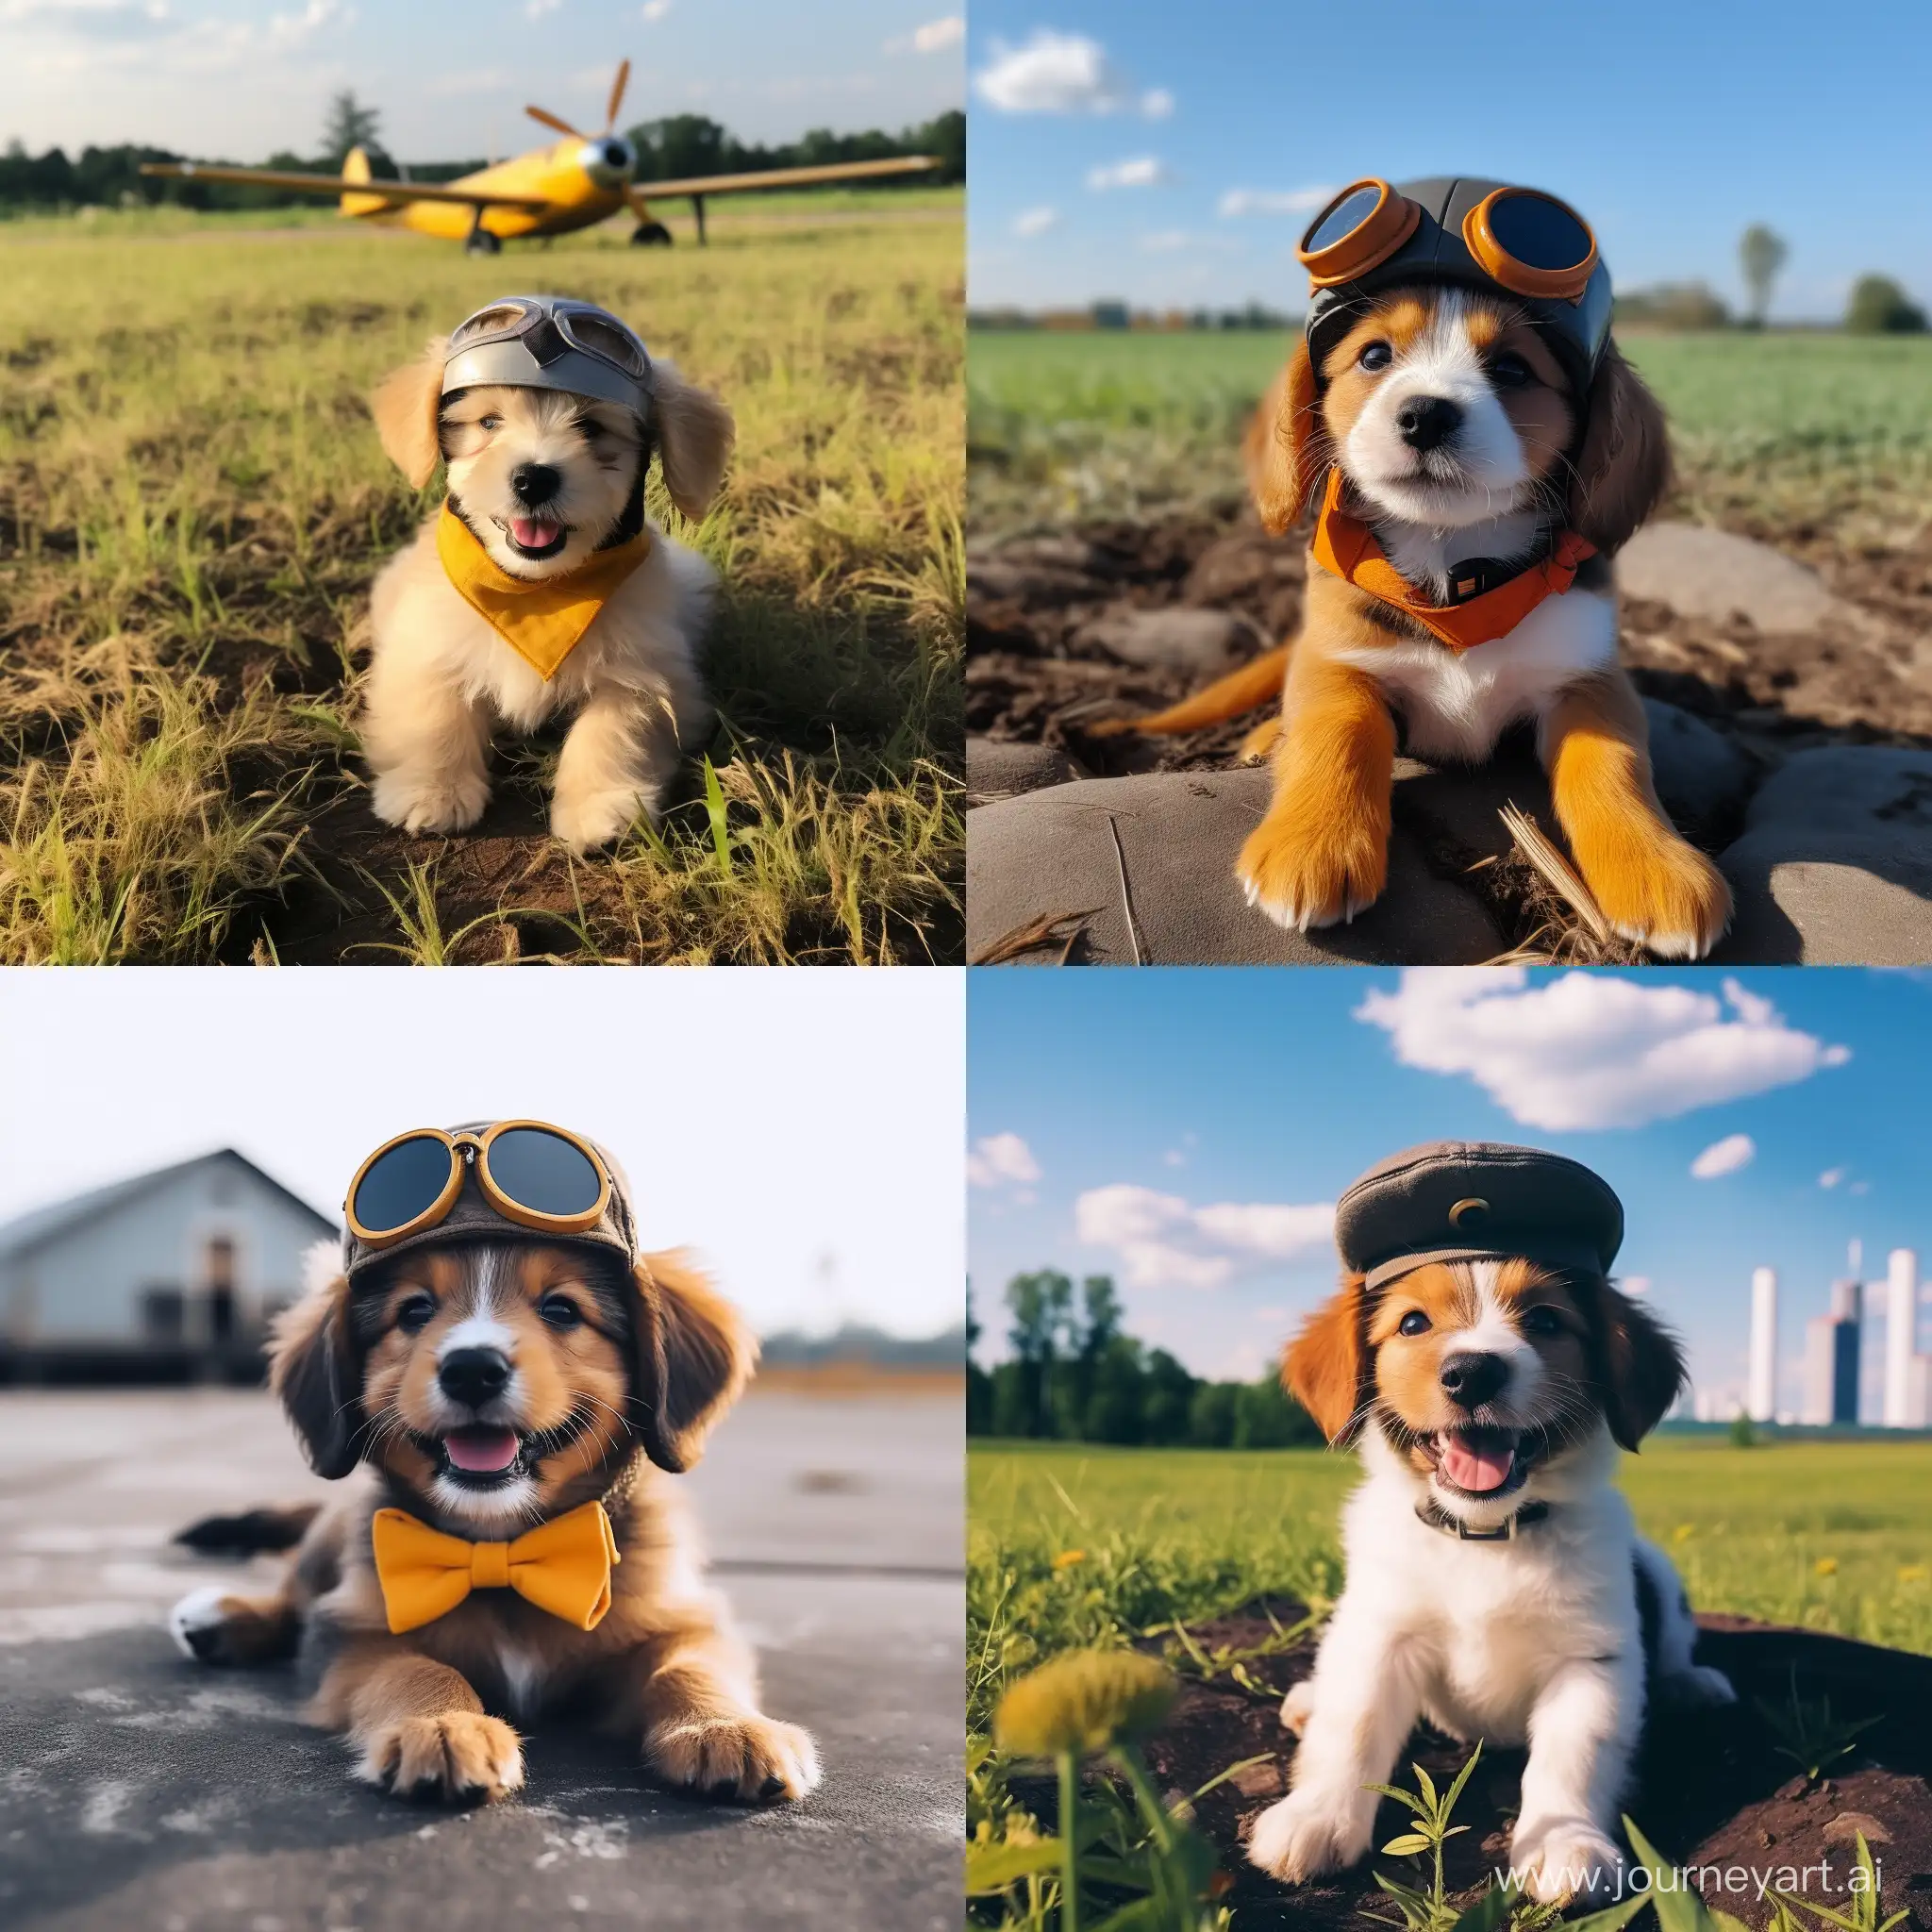 Joyful-Puppy-in-Pilot-Hat-by-the-Airfield